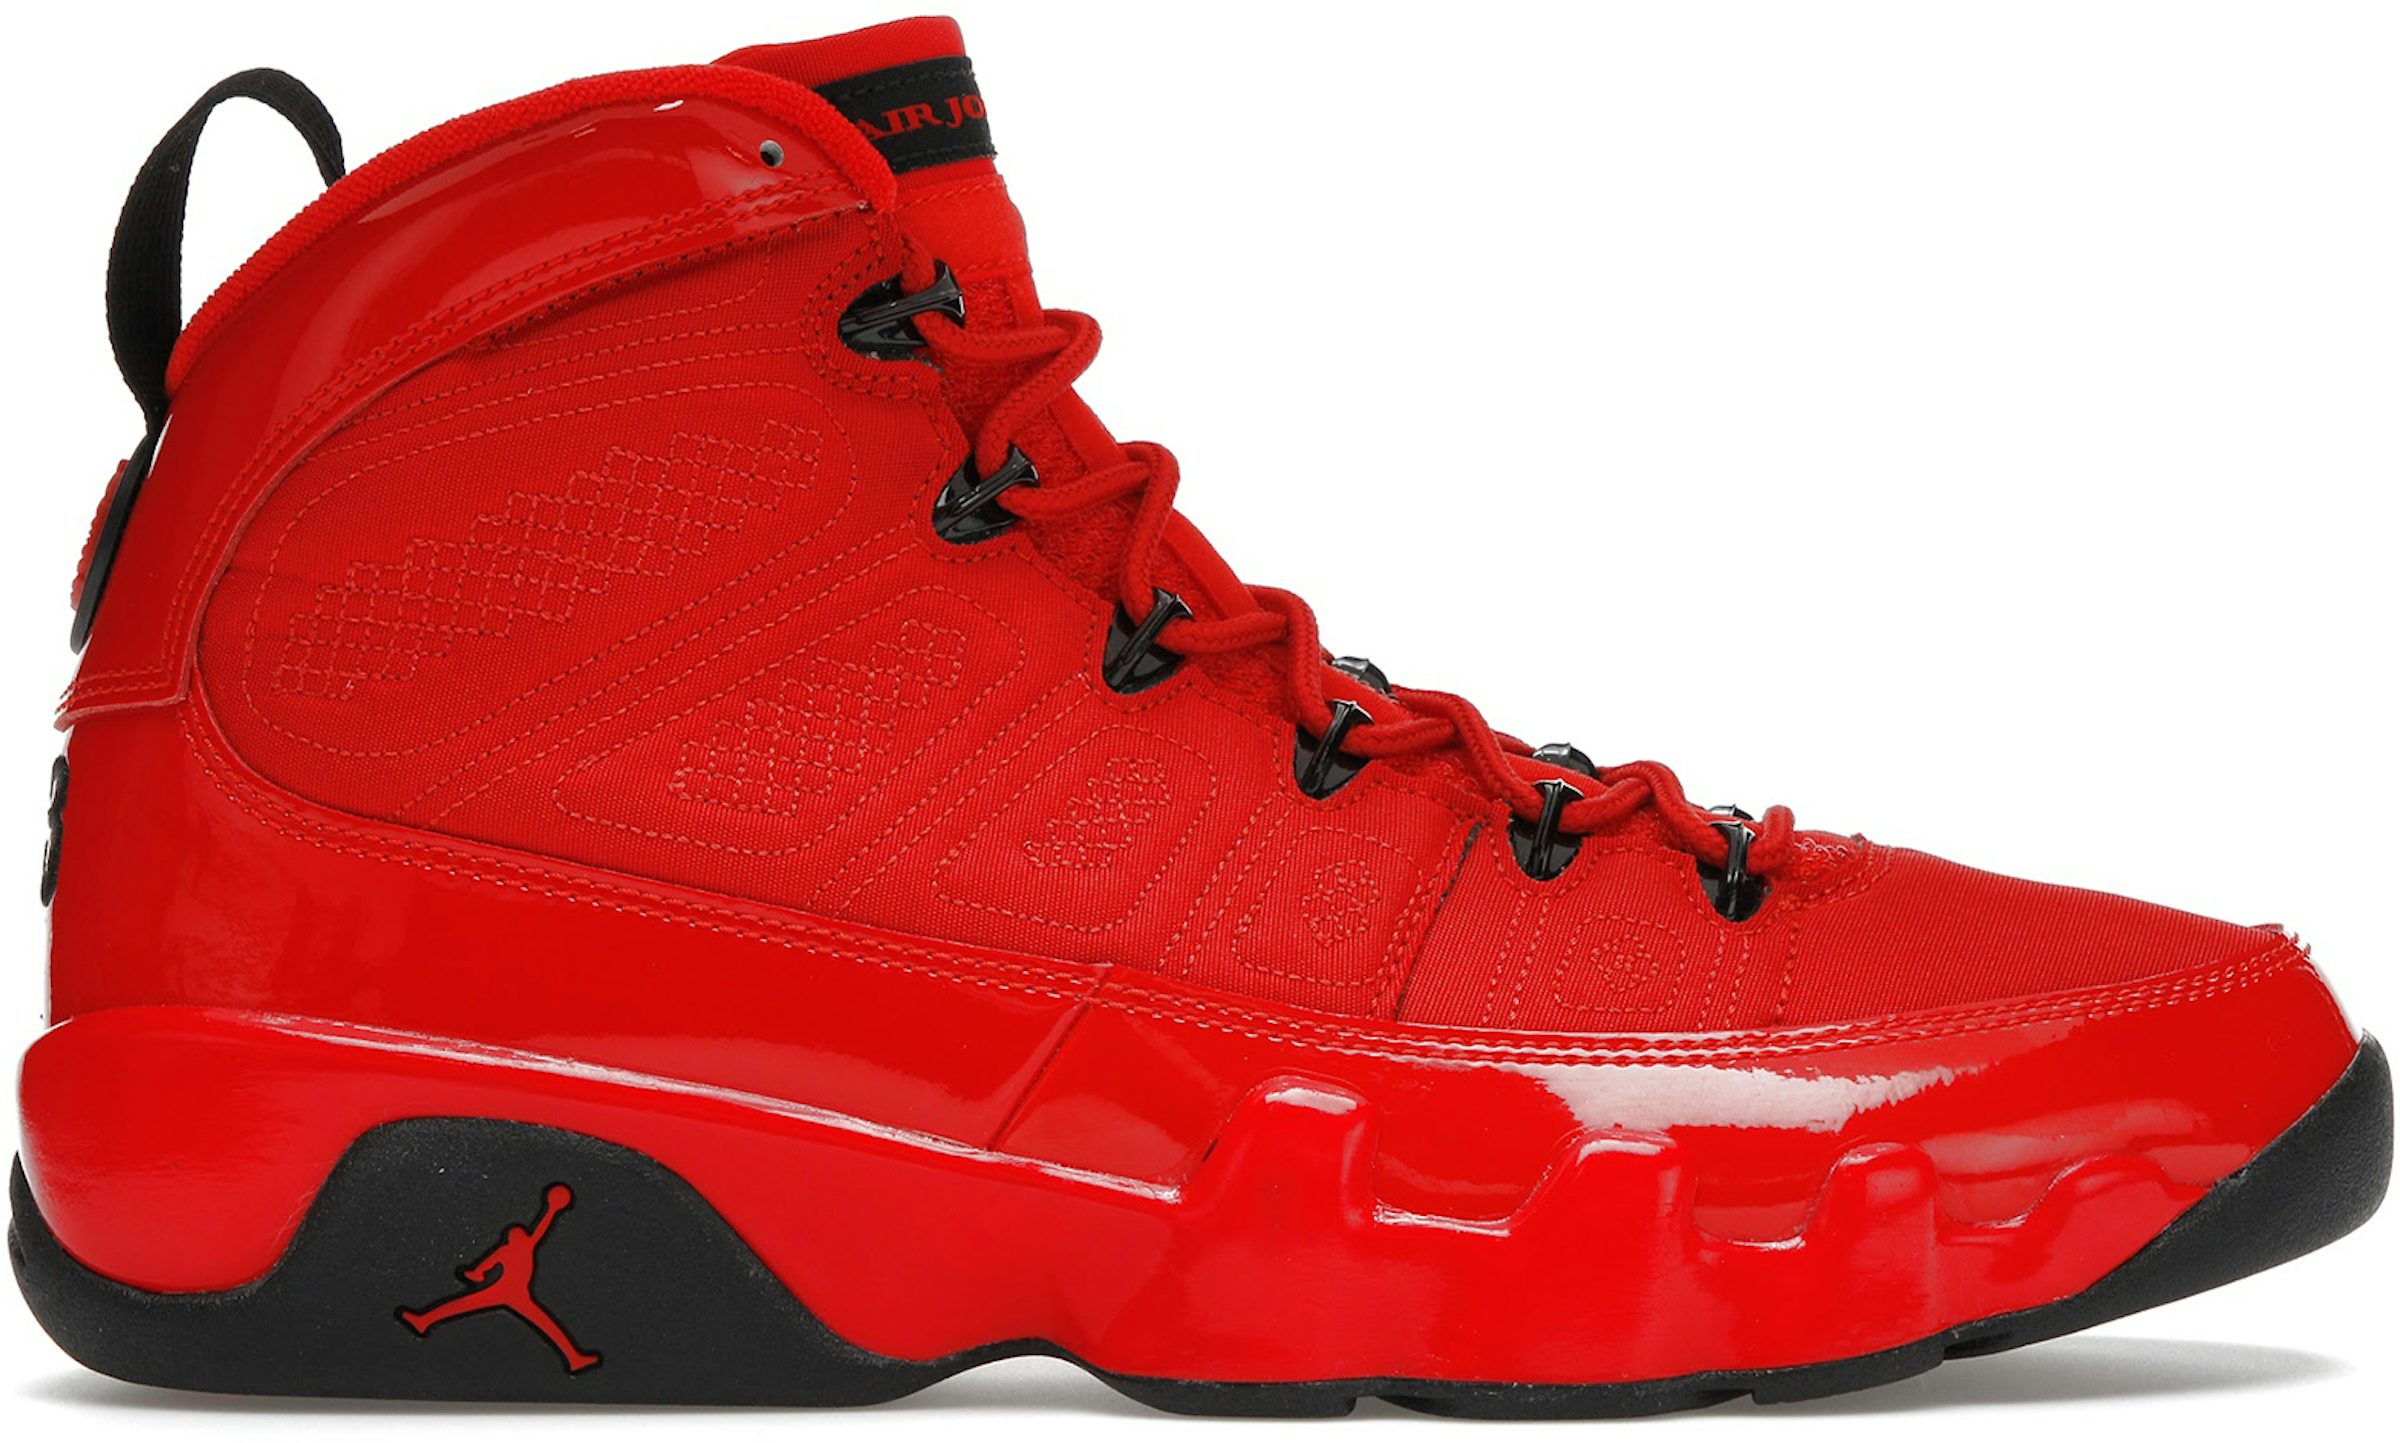 Collections: Jay Jones - 2005 All-Star Game Nike + Air Jordan PE's 